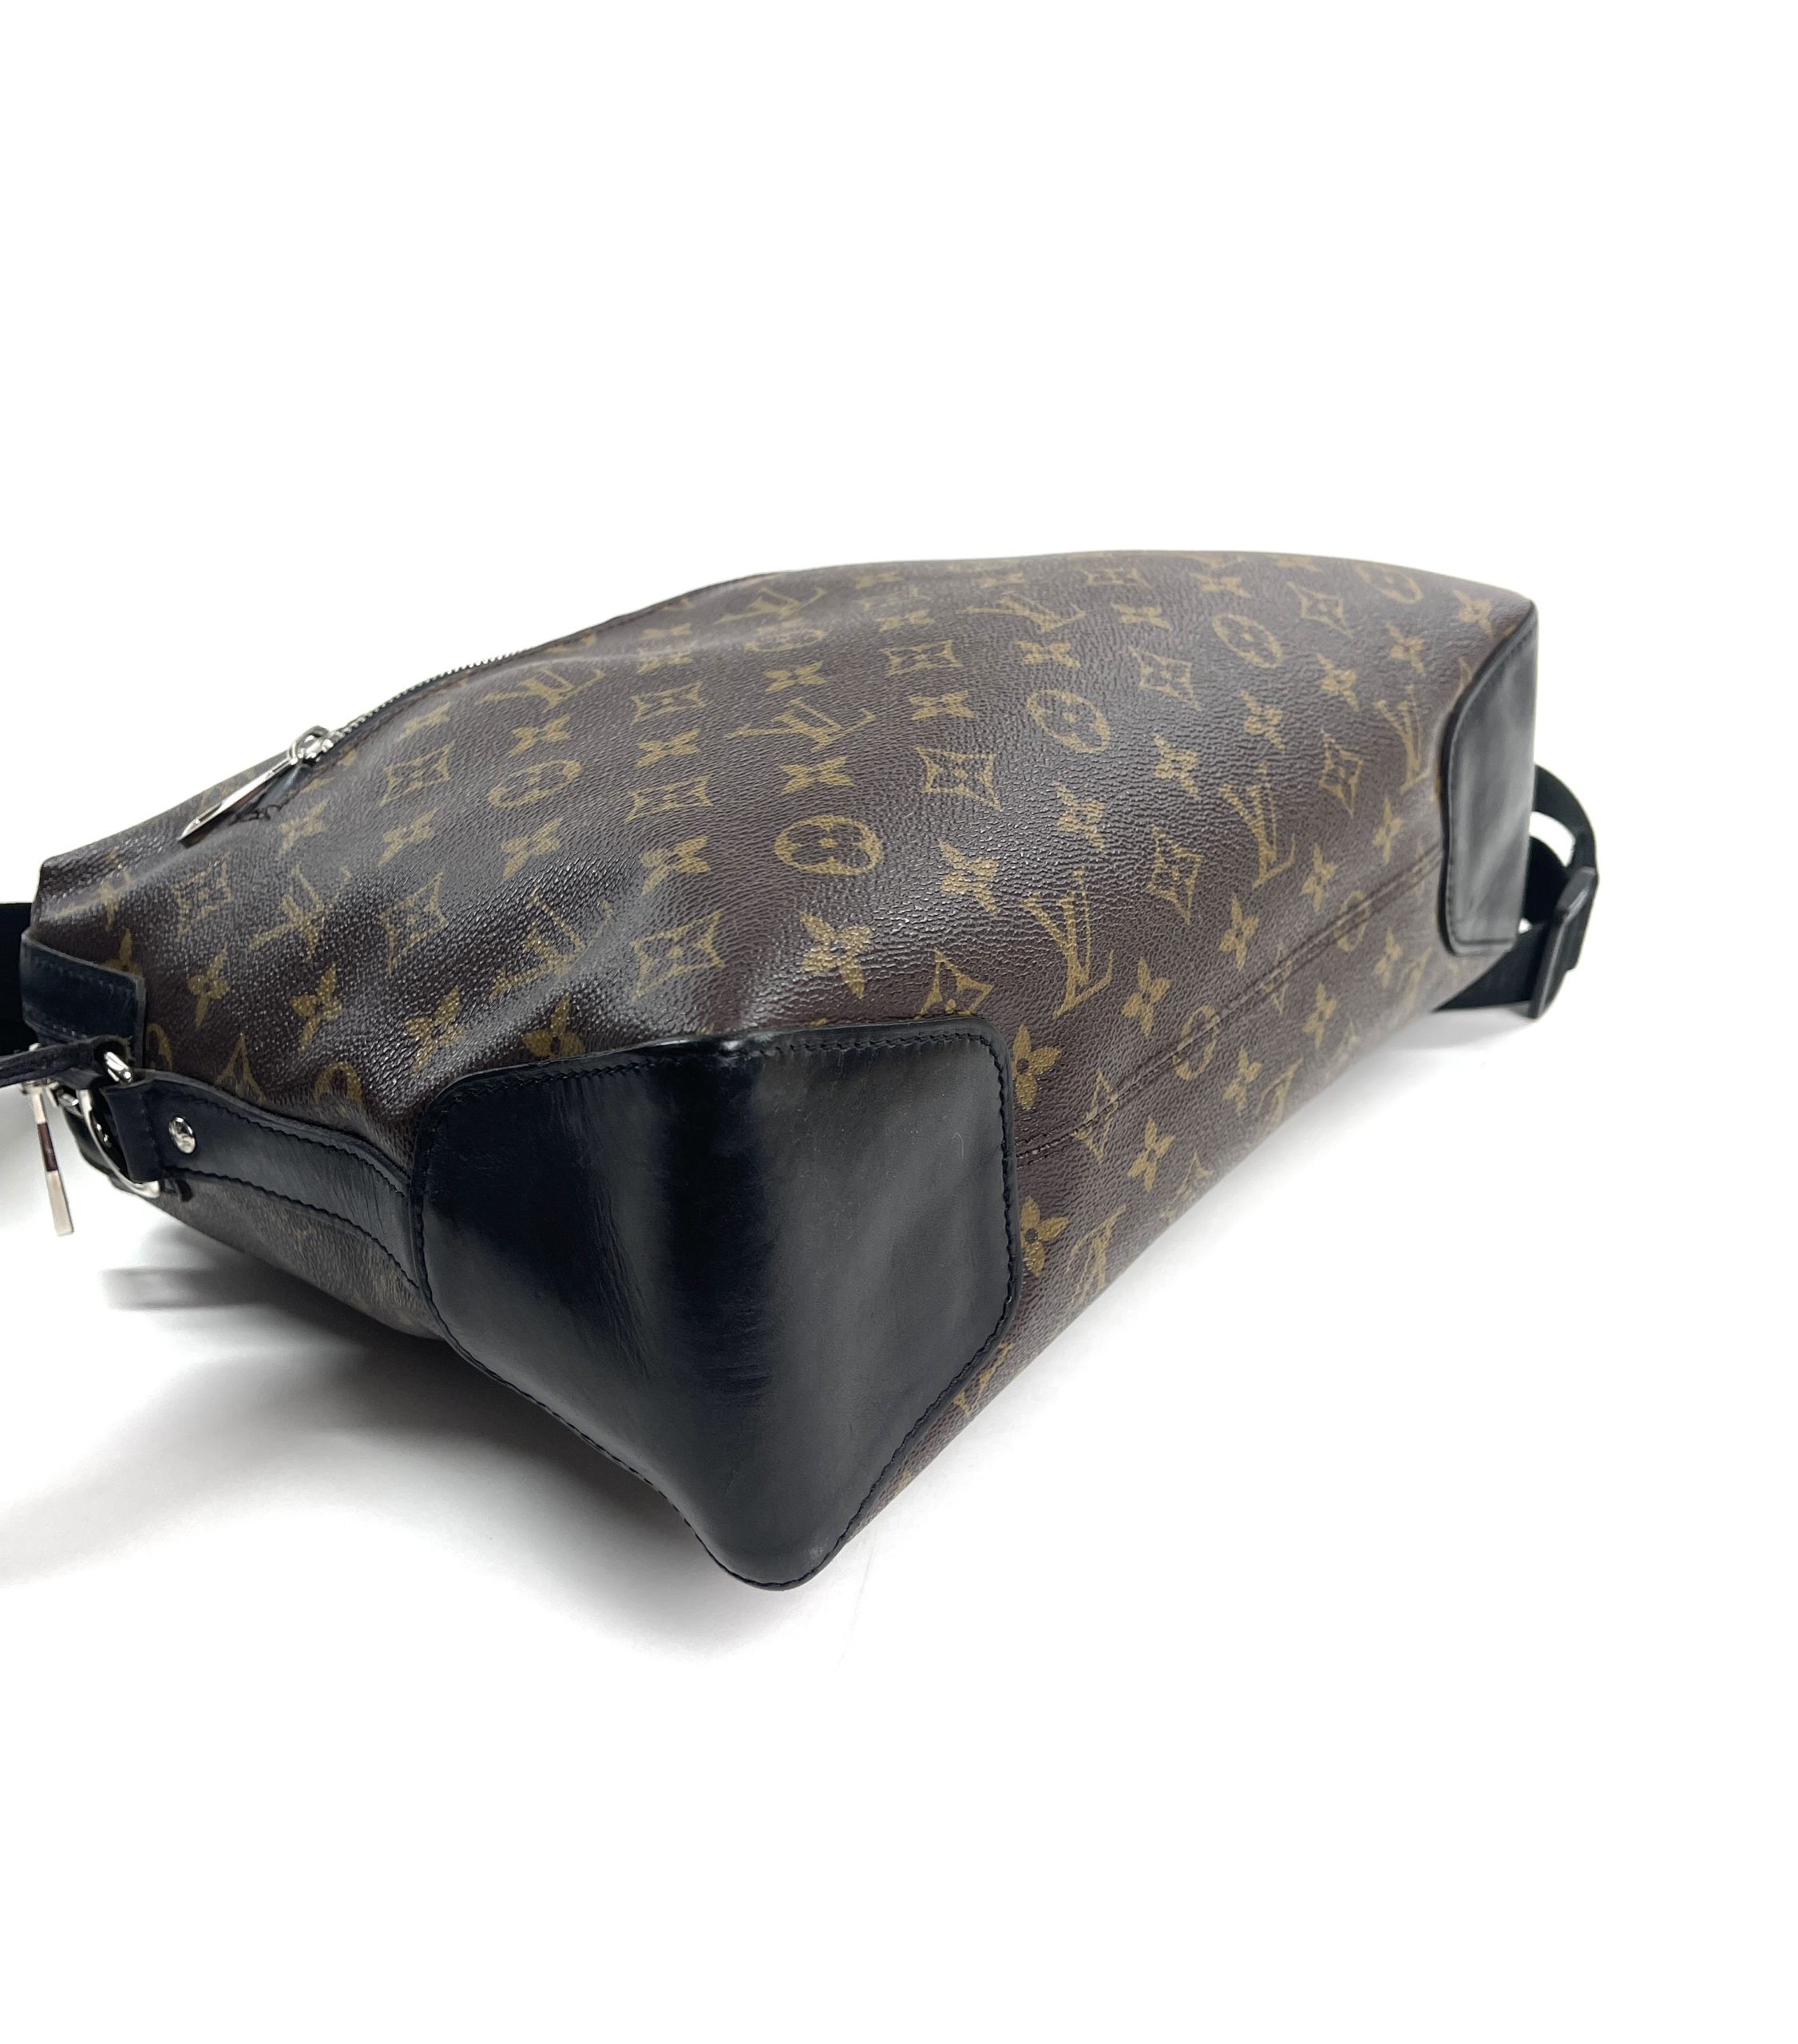 Louis Vuitton Monogram Sac Balade Bag - Farfetch